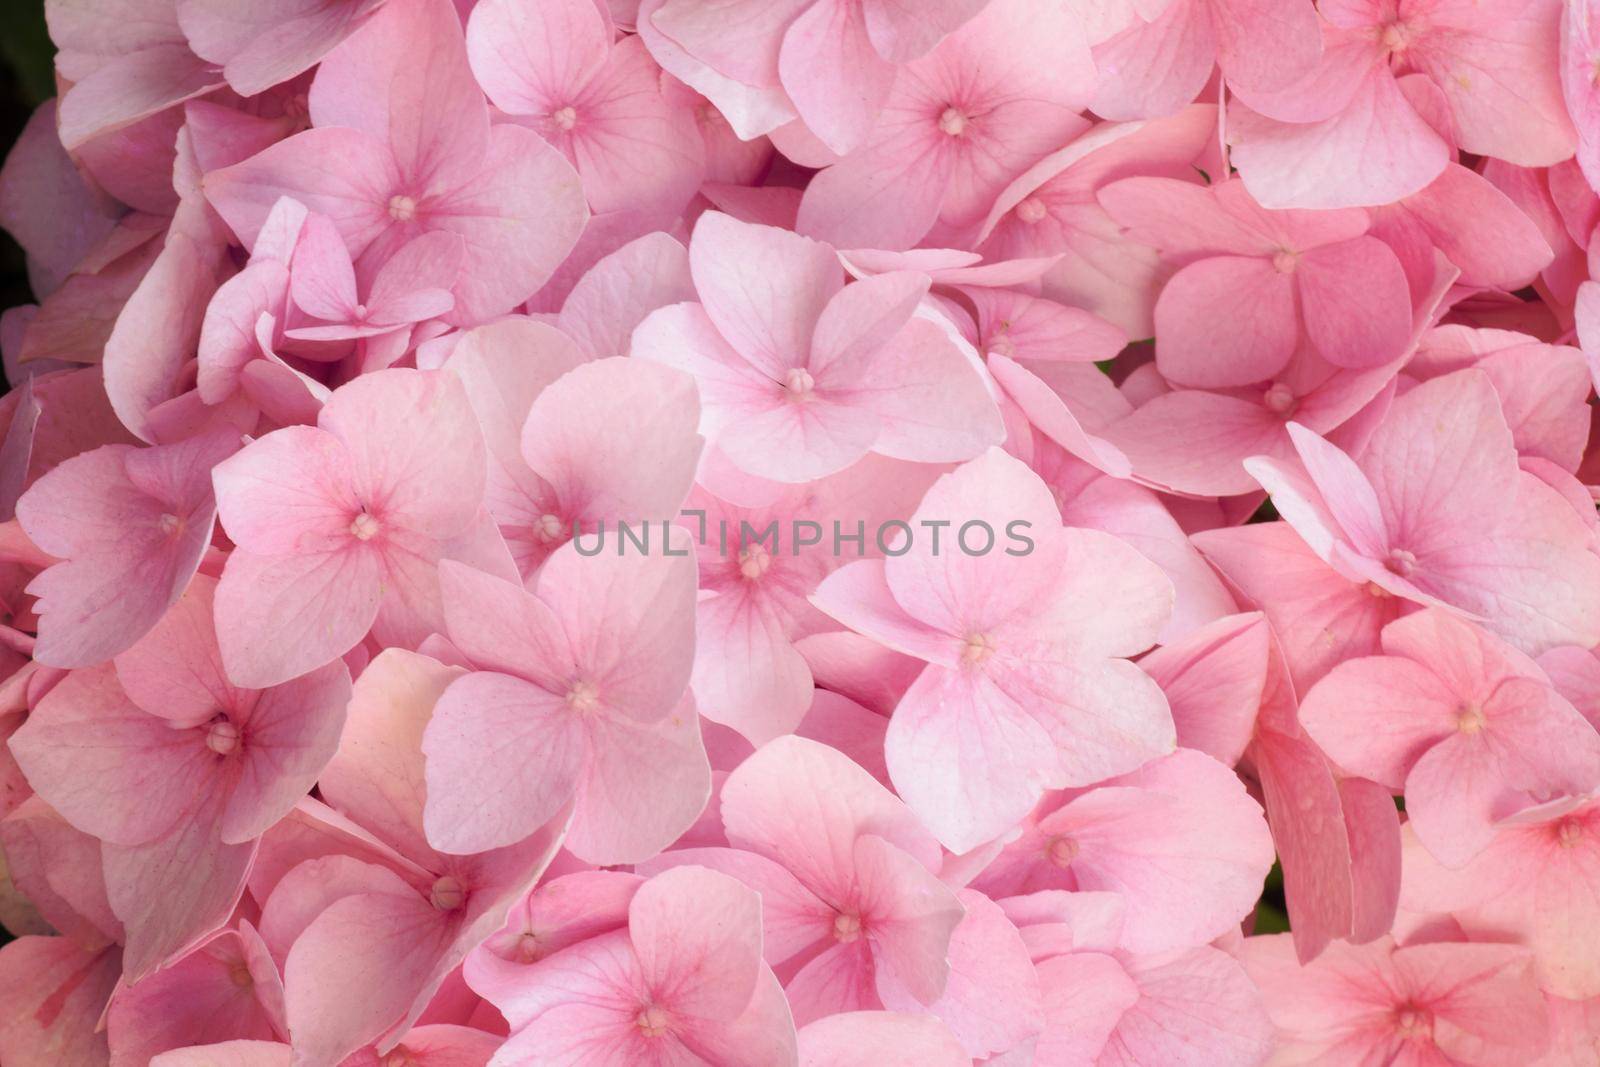 Mackro pink hydrangea Flower Backdrop. Fine Art Floral Natural Textures. Portrait Photo Textures Digital Studio Background, Best for cute family photos, atmospheric newborn designs Photoshop Overlays